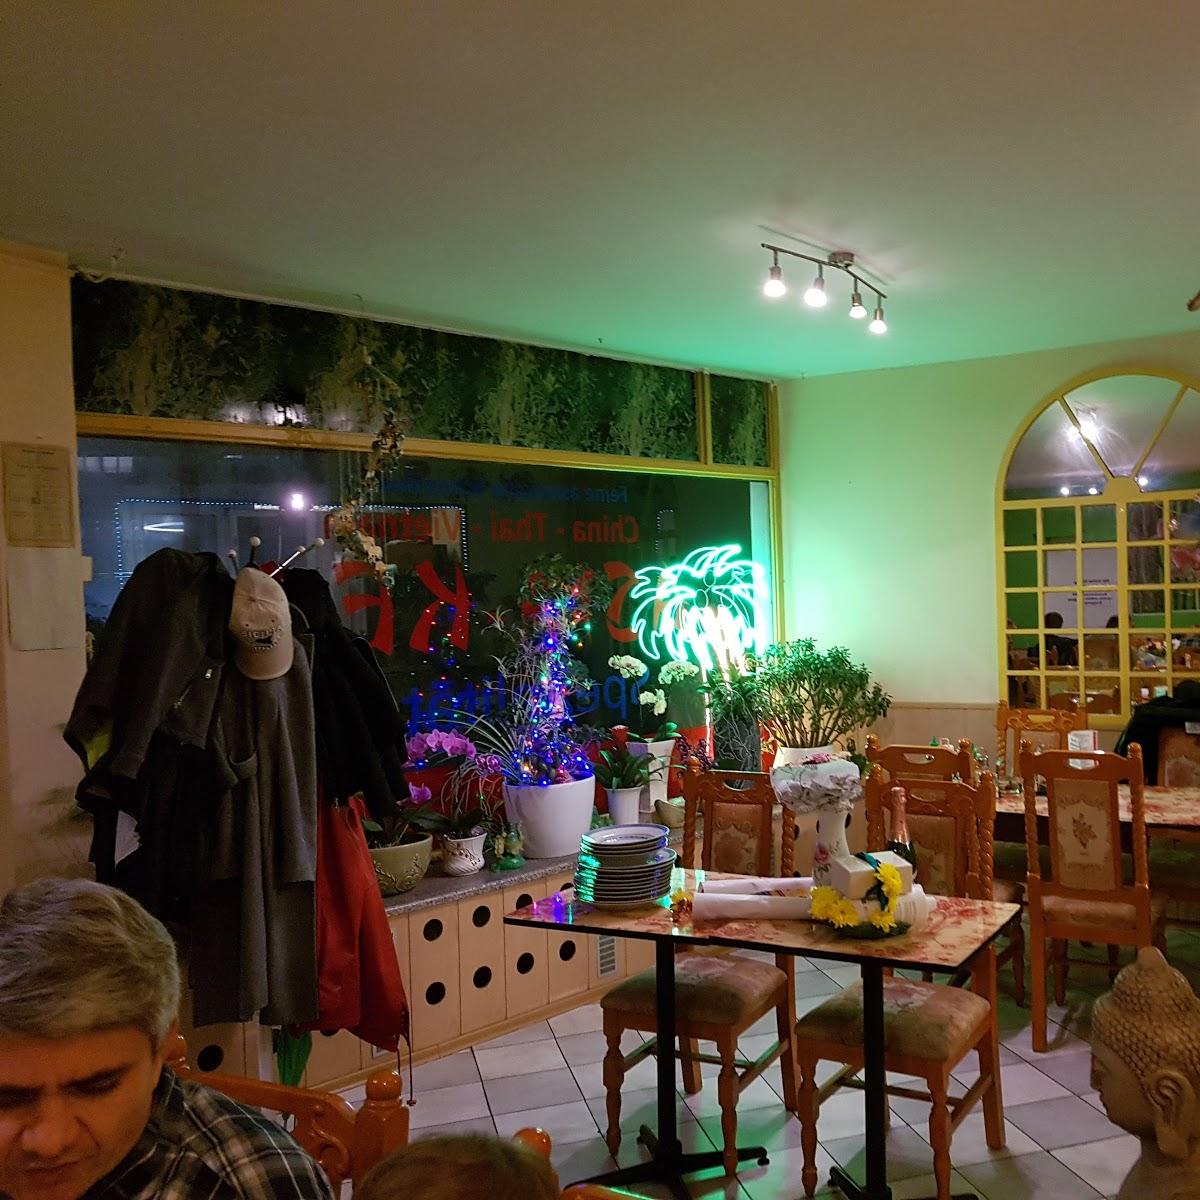 Restaurant "Asia-Keo" in  Kirchhain